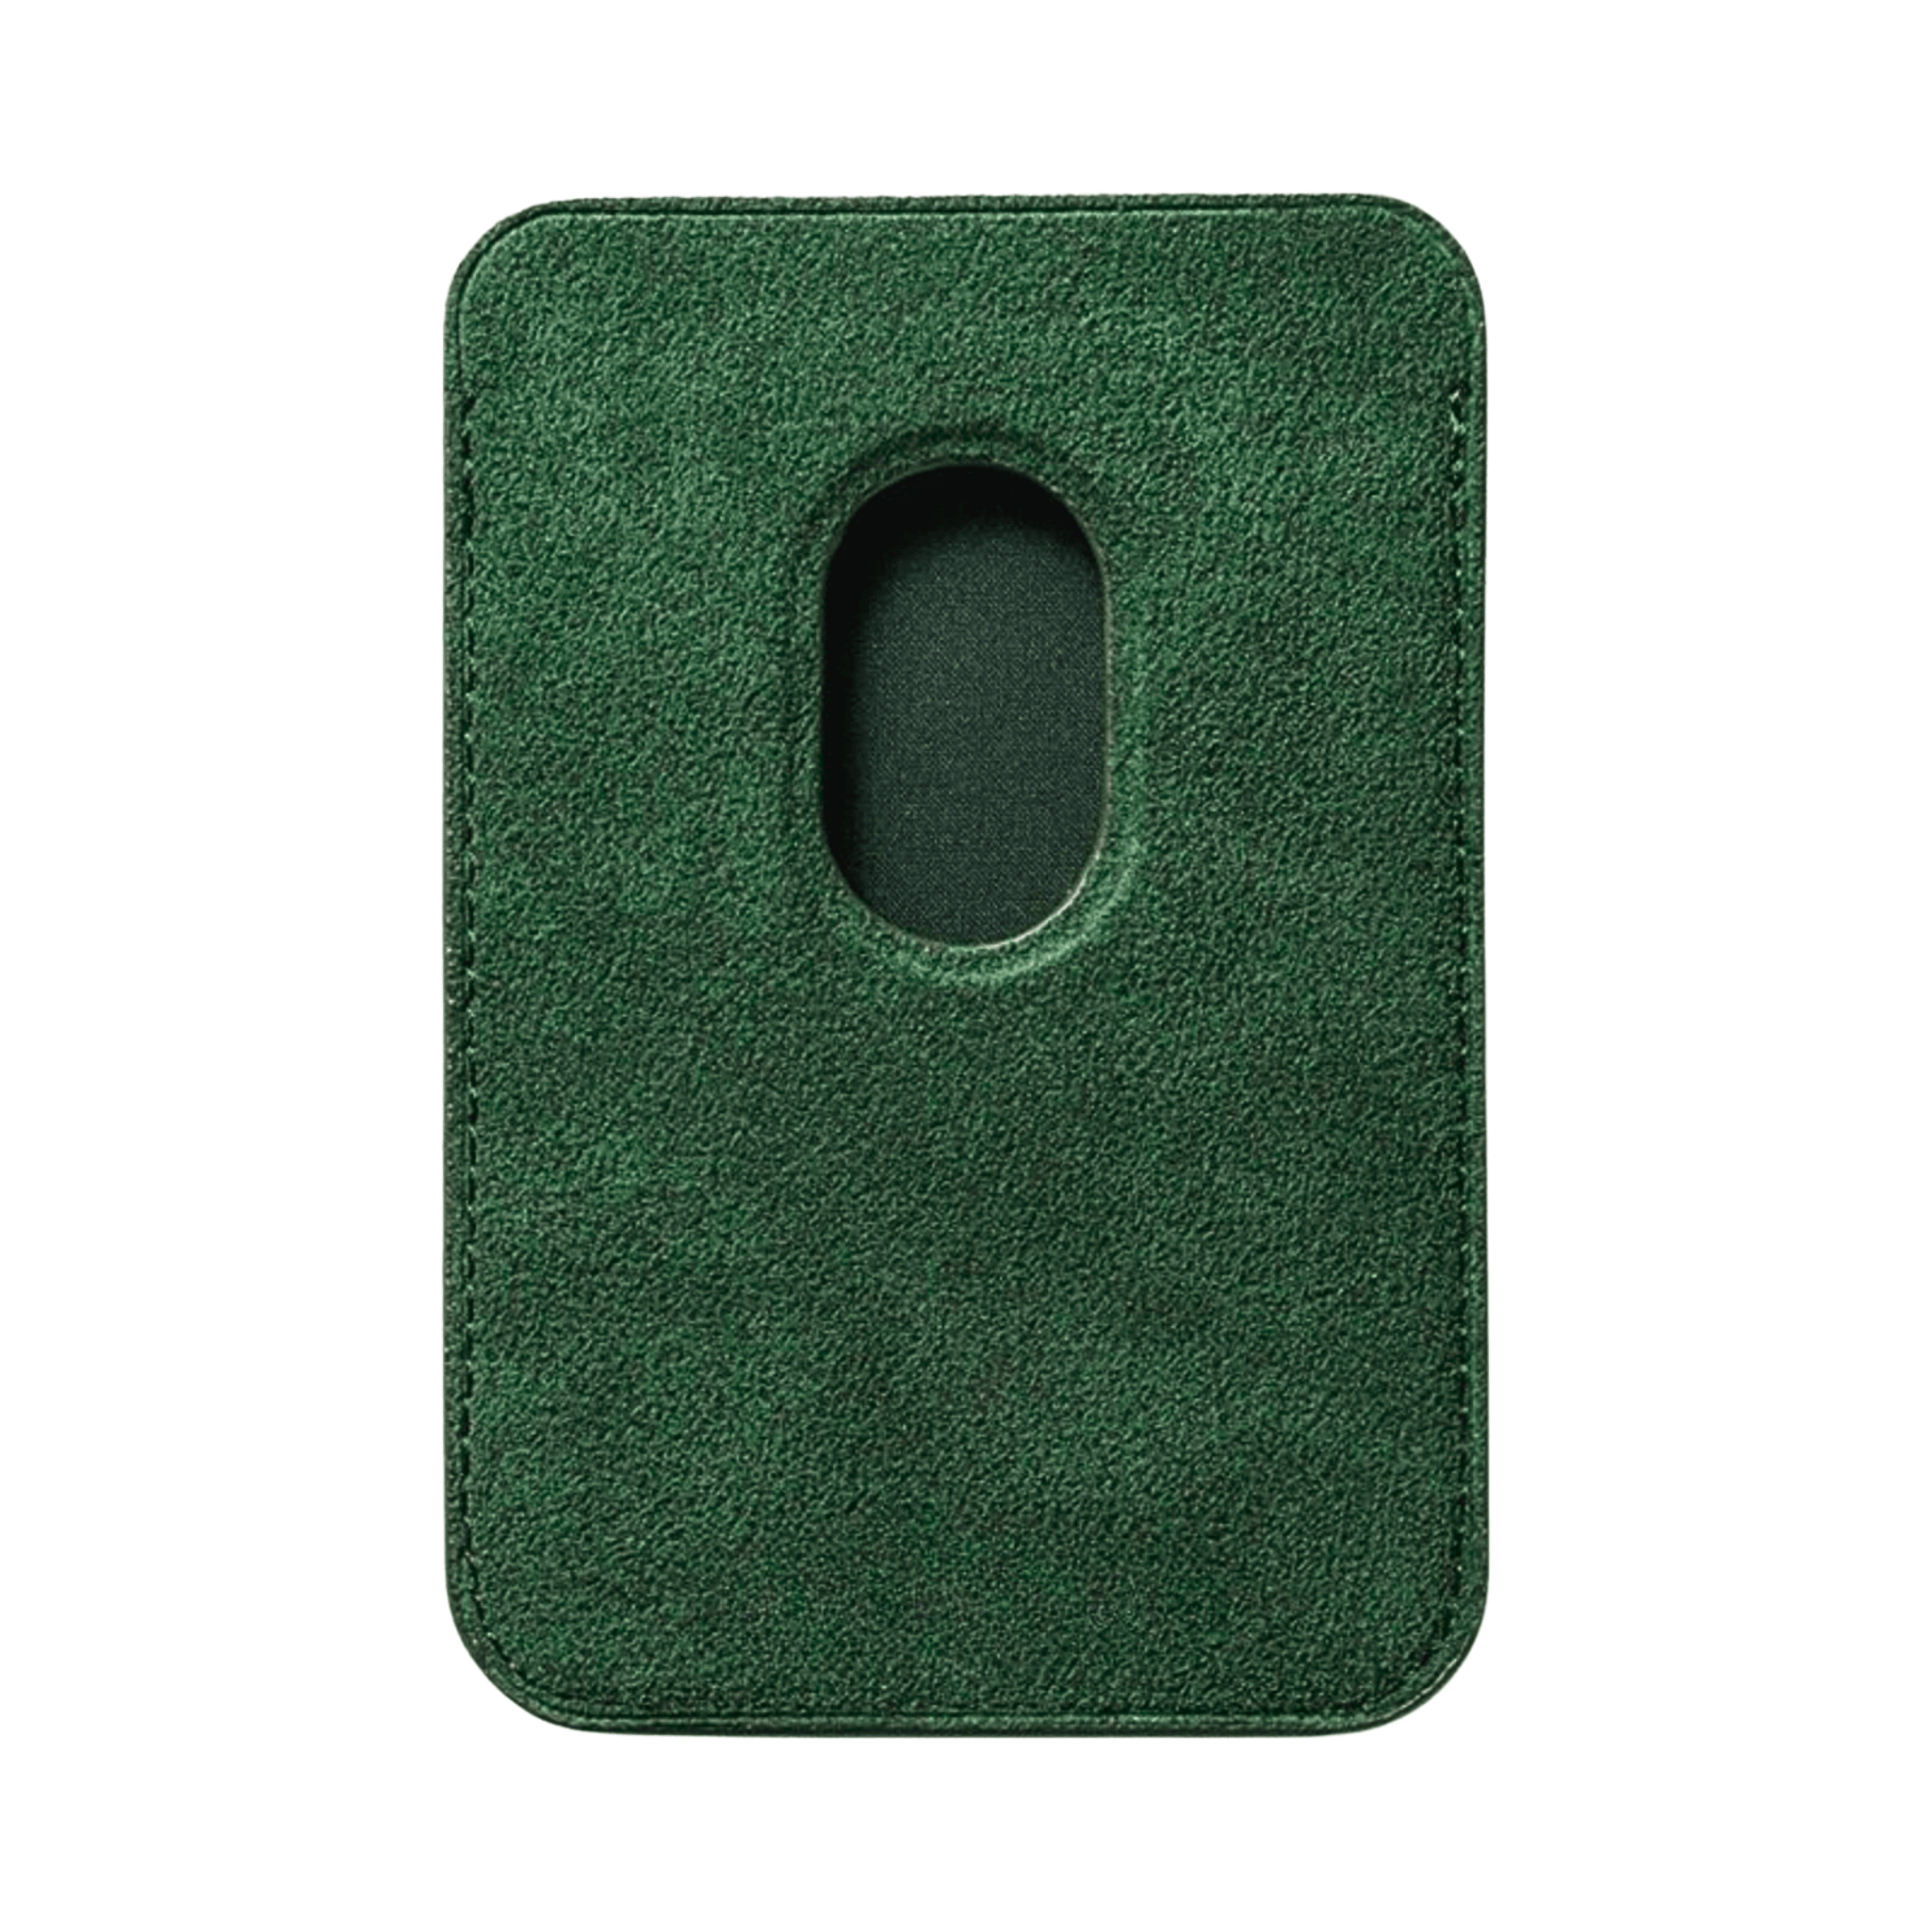 Alcantara iPhone Case + MagSafe Wallet + AirPod Case - Forest Green Edition